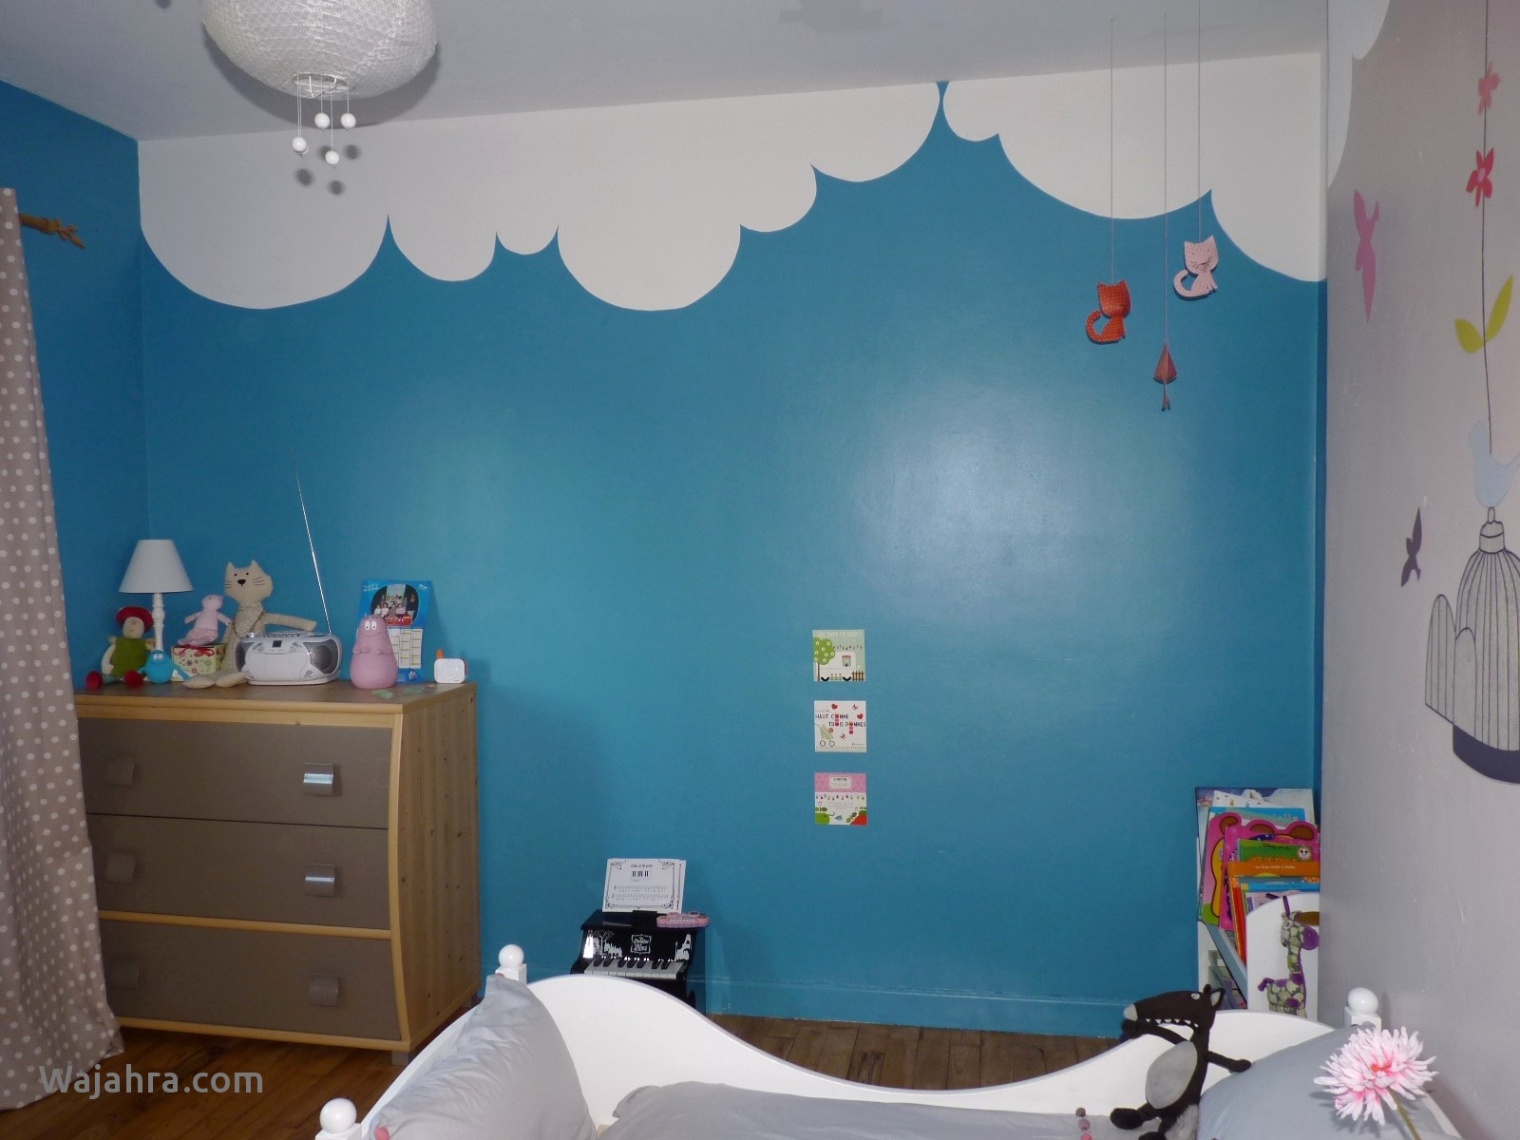 chambre bleu et taupe inspirant chambre bleu enfant tout sur les chambre enfant bleu chambre enfant bleu